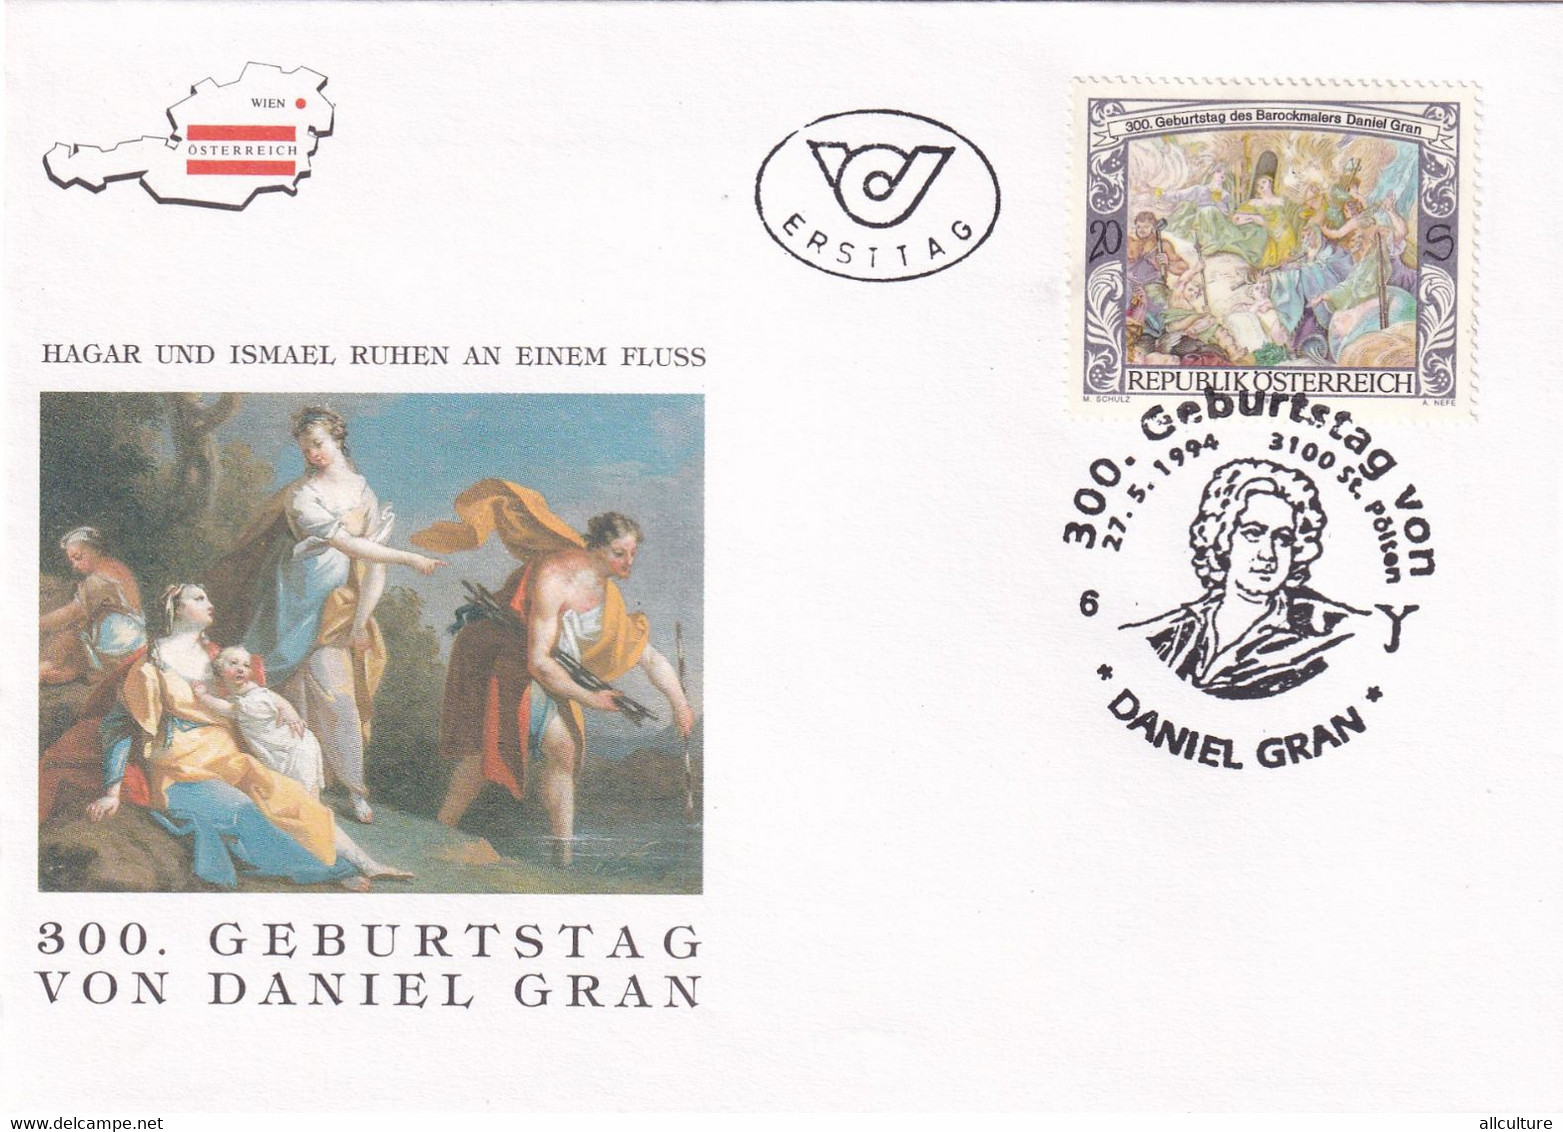 A8393- ERSTTAG DANIEL GRAN PAINTINGS, WEIN 1994 REPUBLIC OSTERREICH AUSTRIA USED STAMP ON COVER - Cartas & Documentos